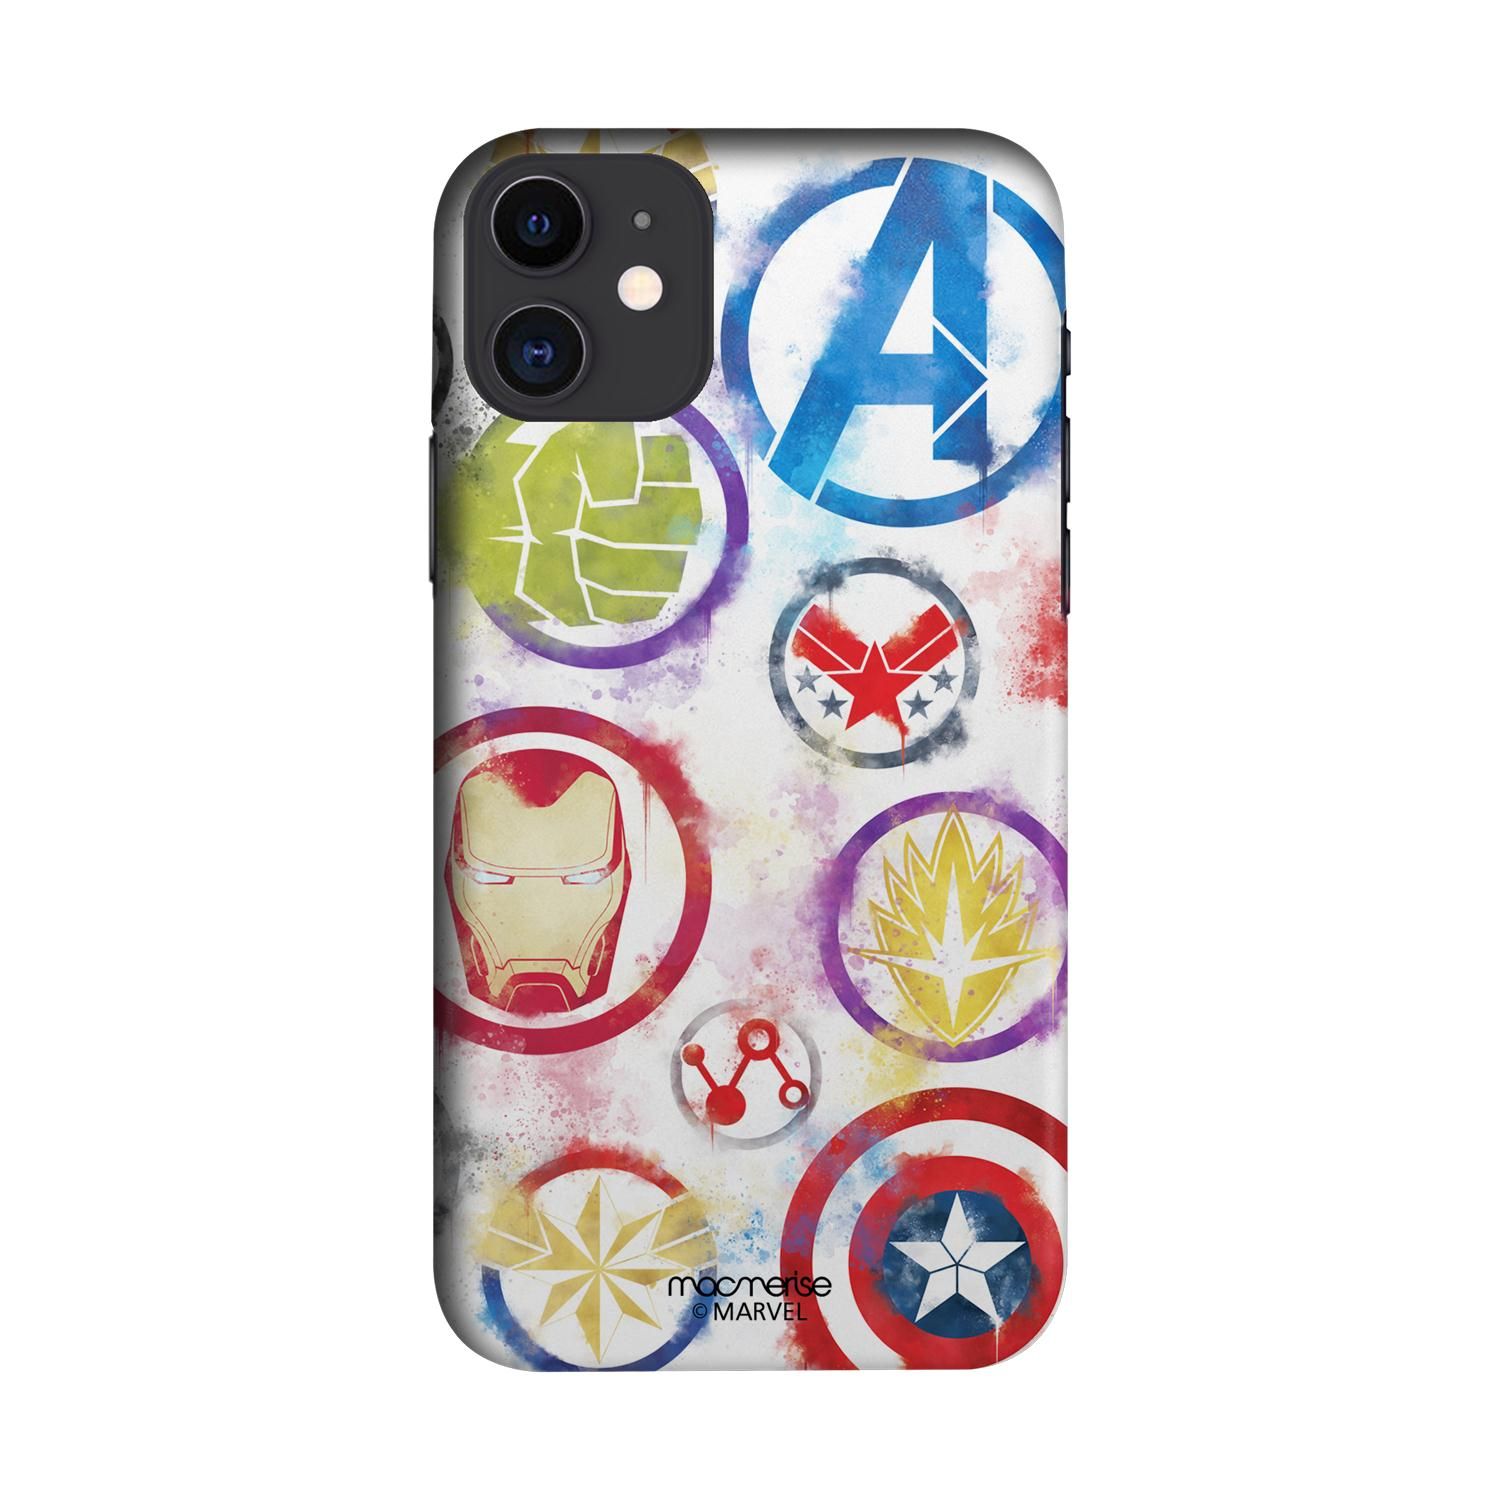 Buy Avengers Icons Graffiti - Sleek Phone Case for iPhone 11 Online